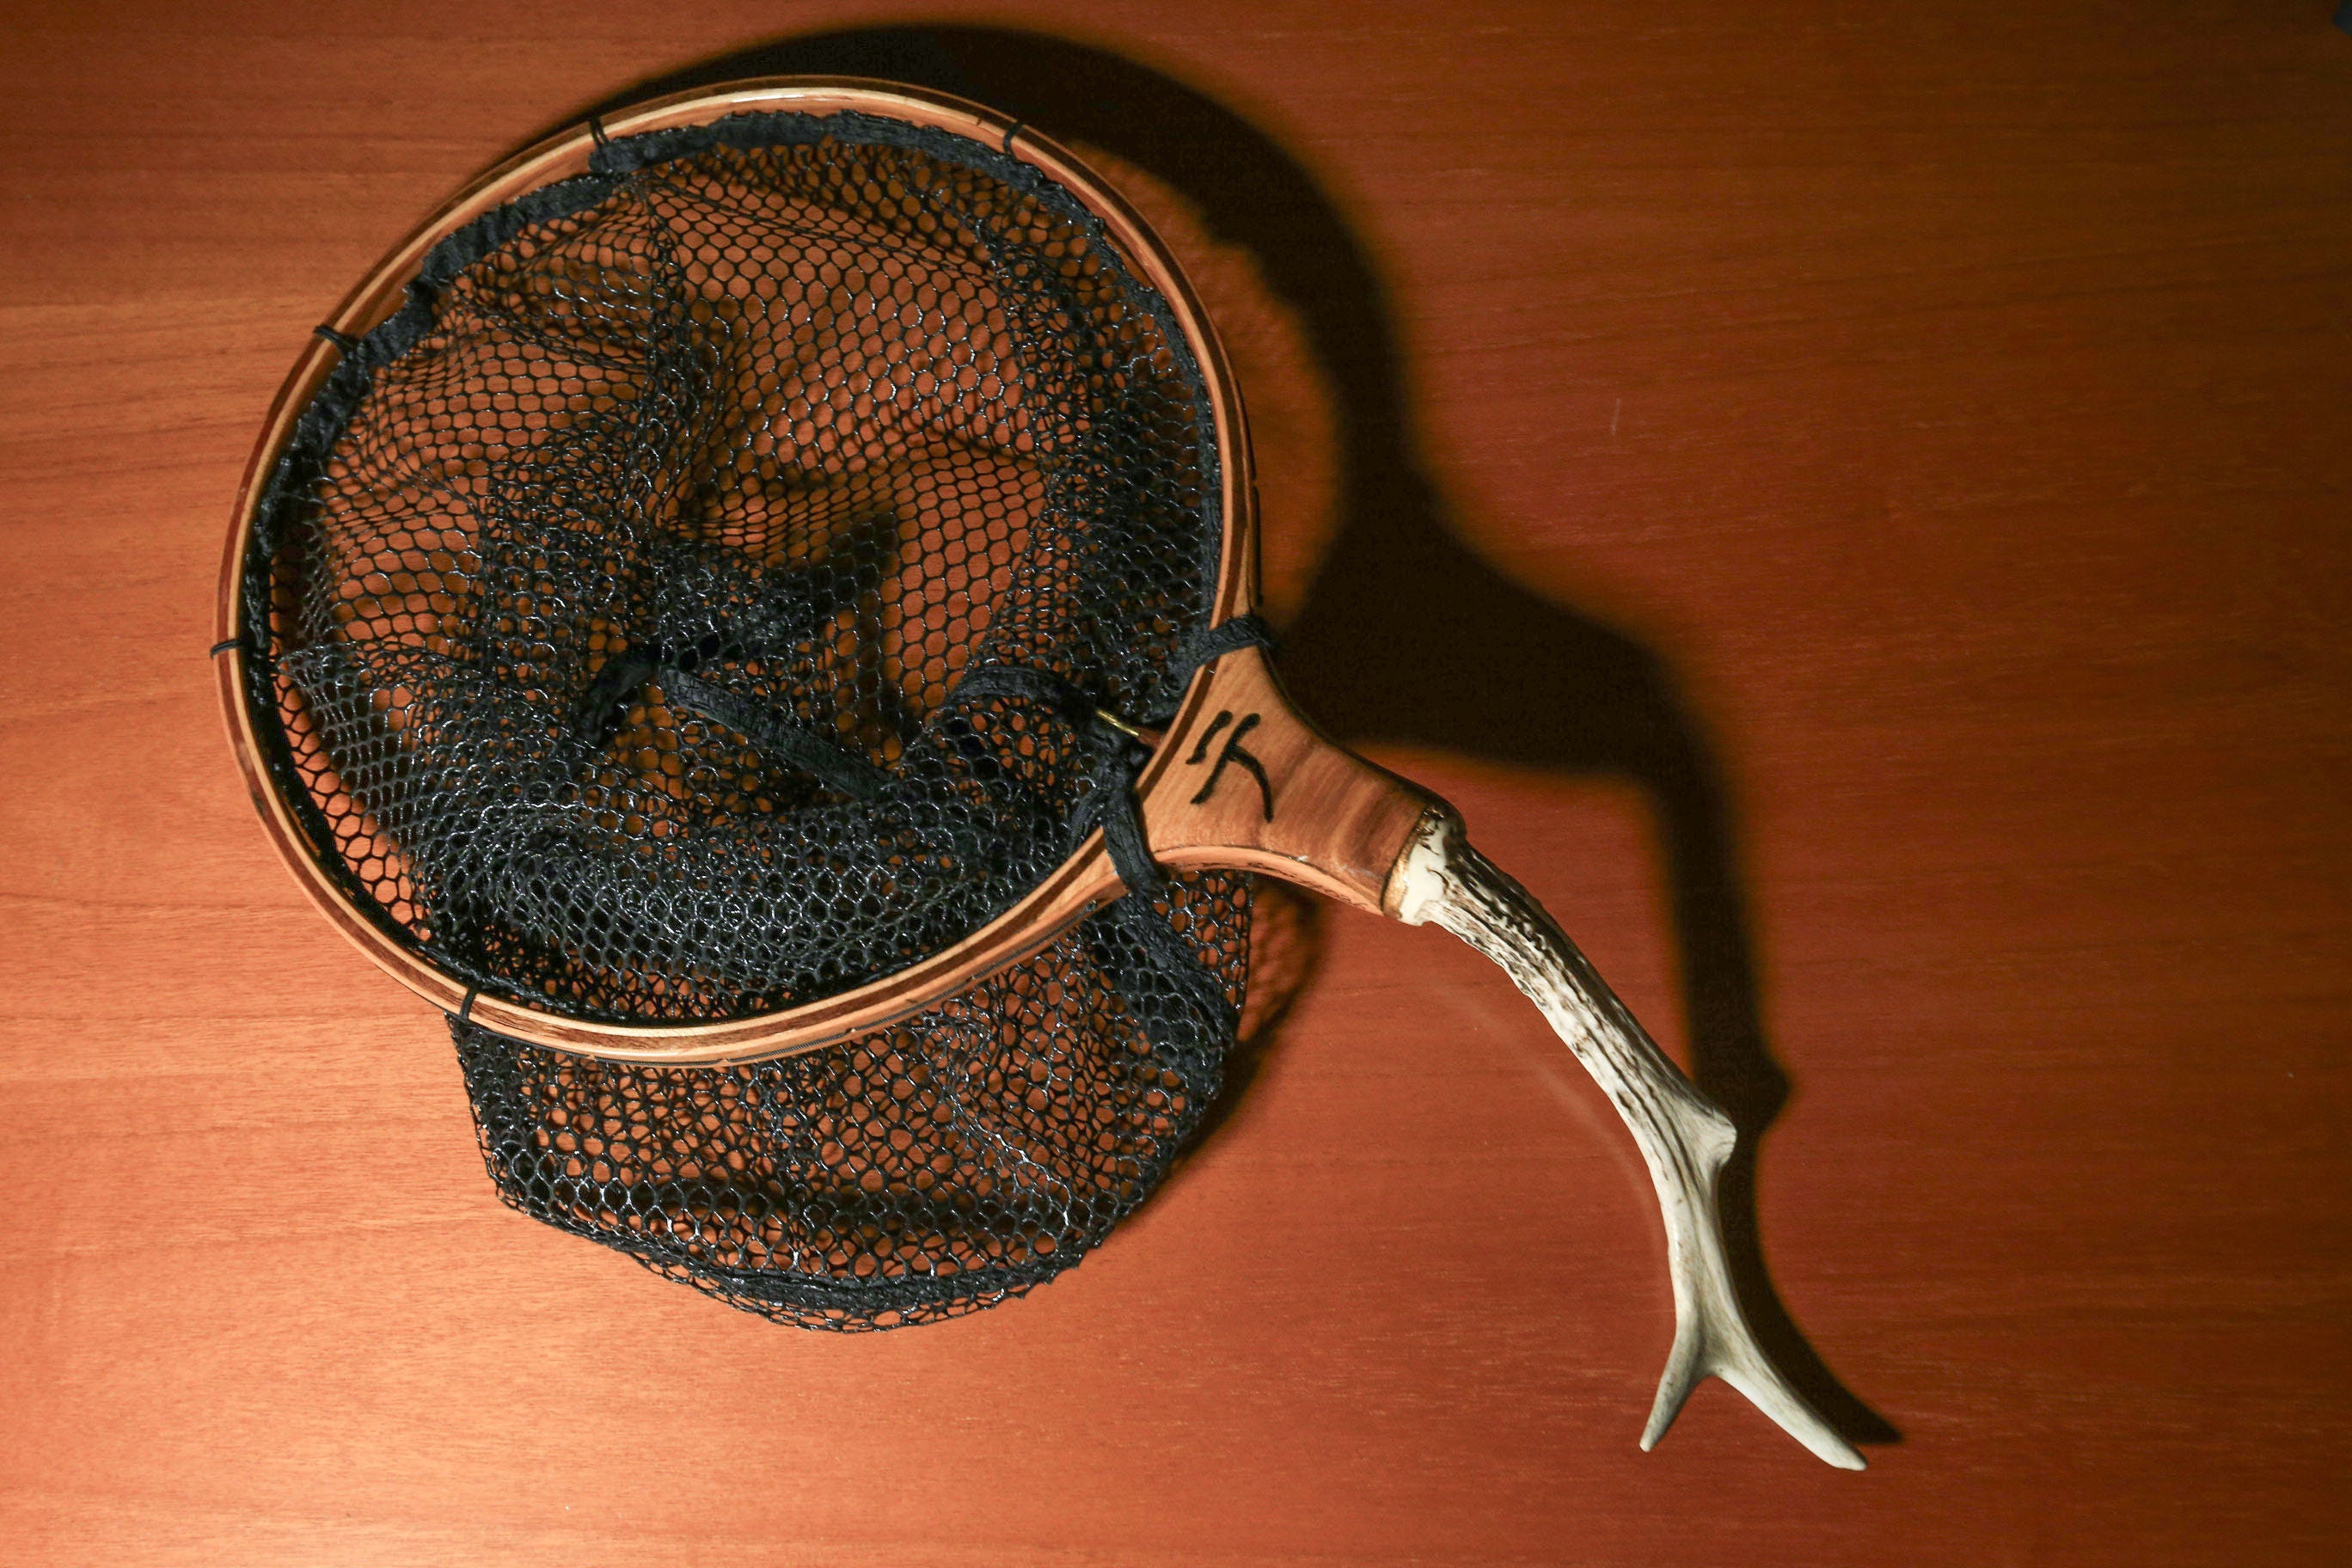 Tenkara landing net with roe deer horn handle. 25 cm in diameter, C&R  rubberized mesh